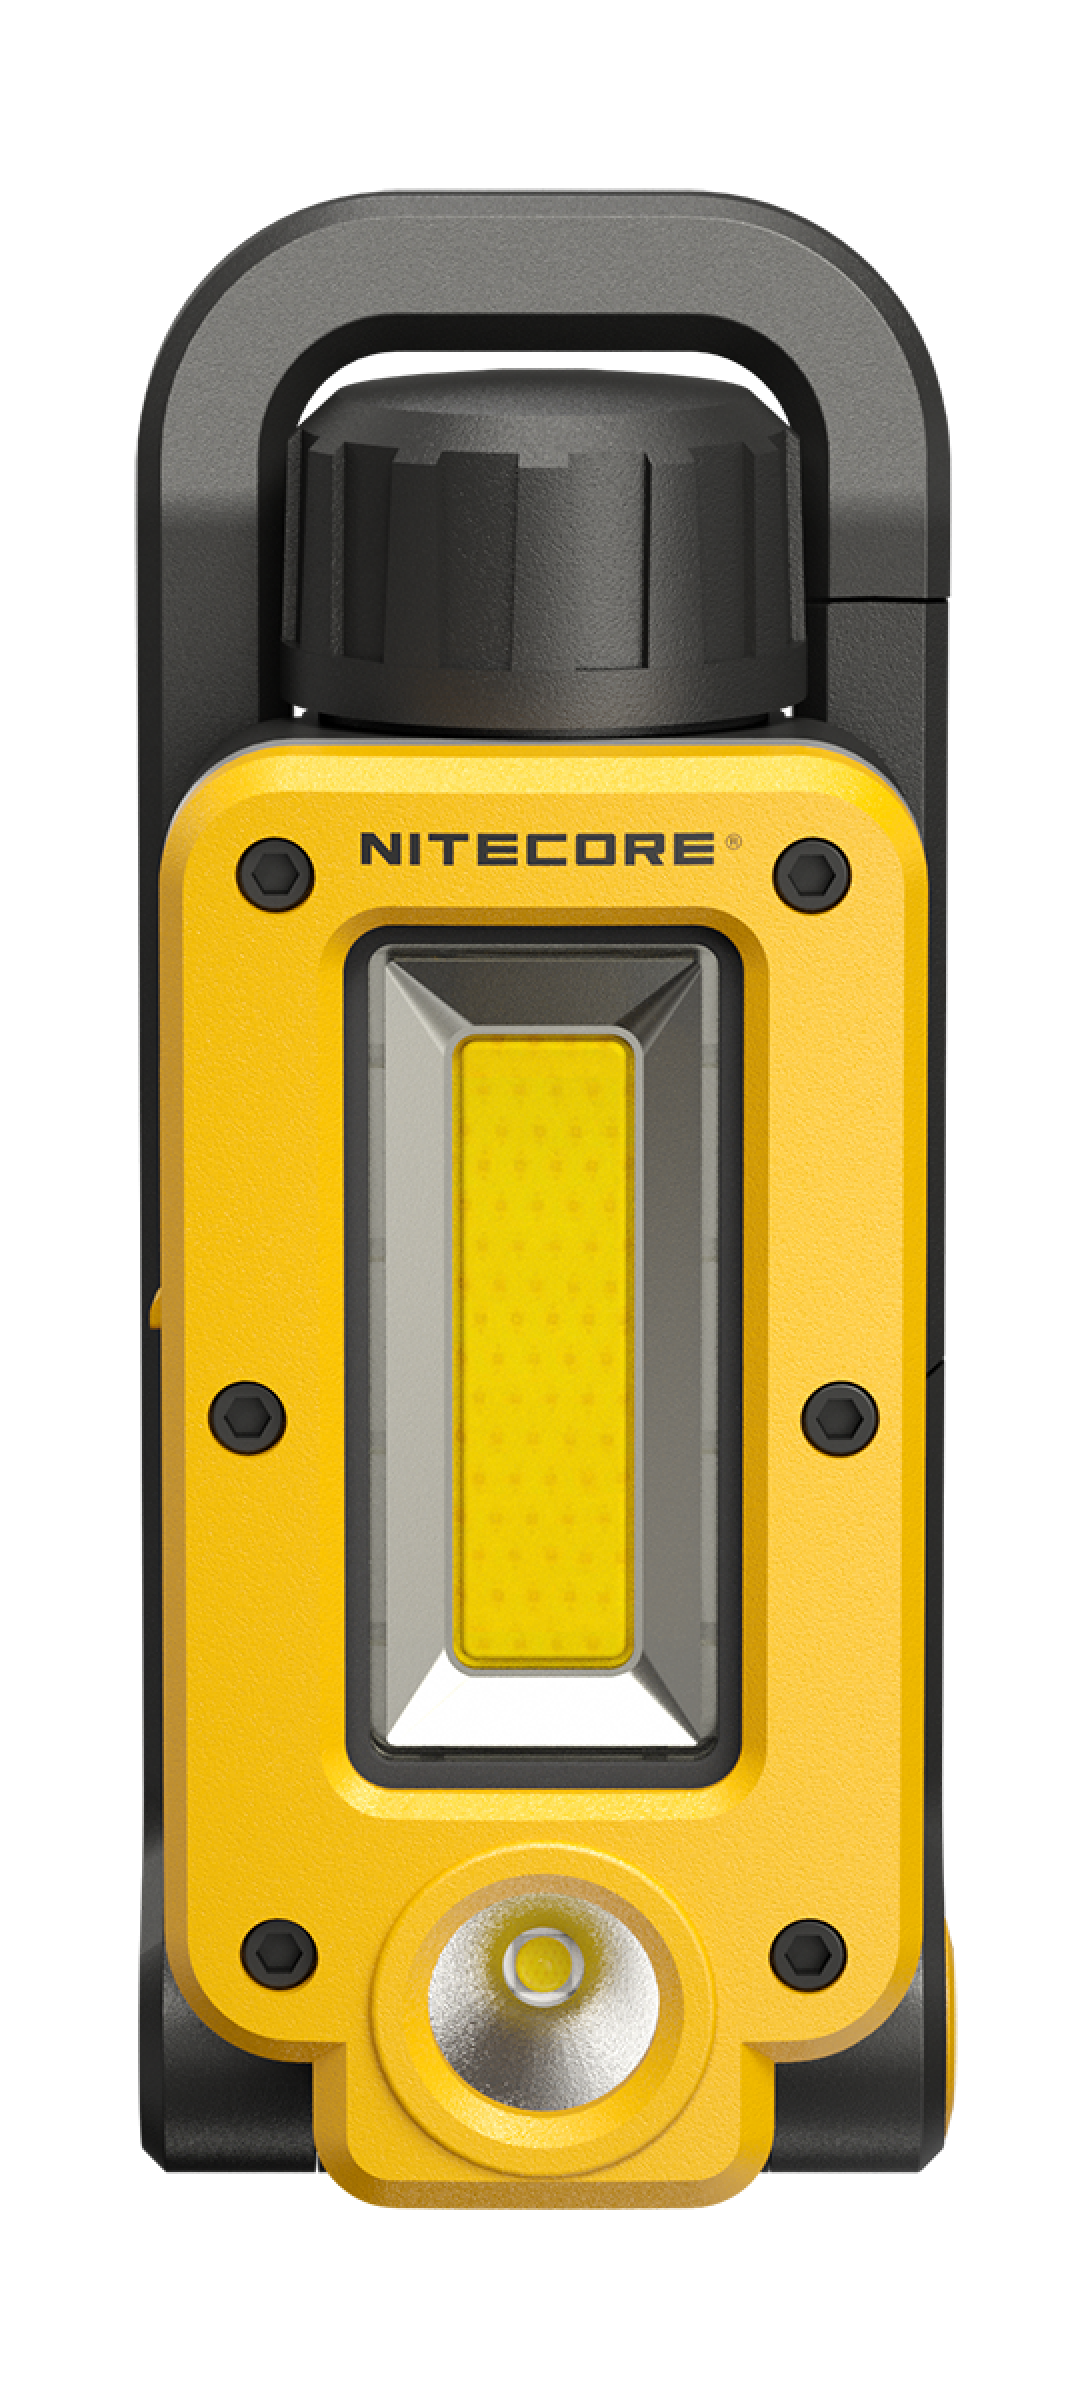 Nitecore Worklight NWL20 - 600 Lumen